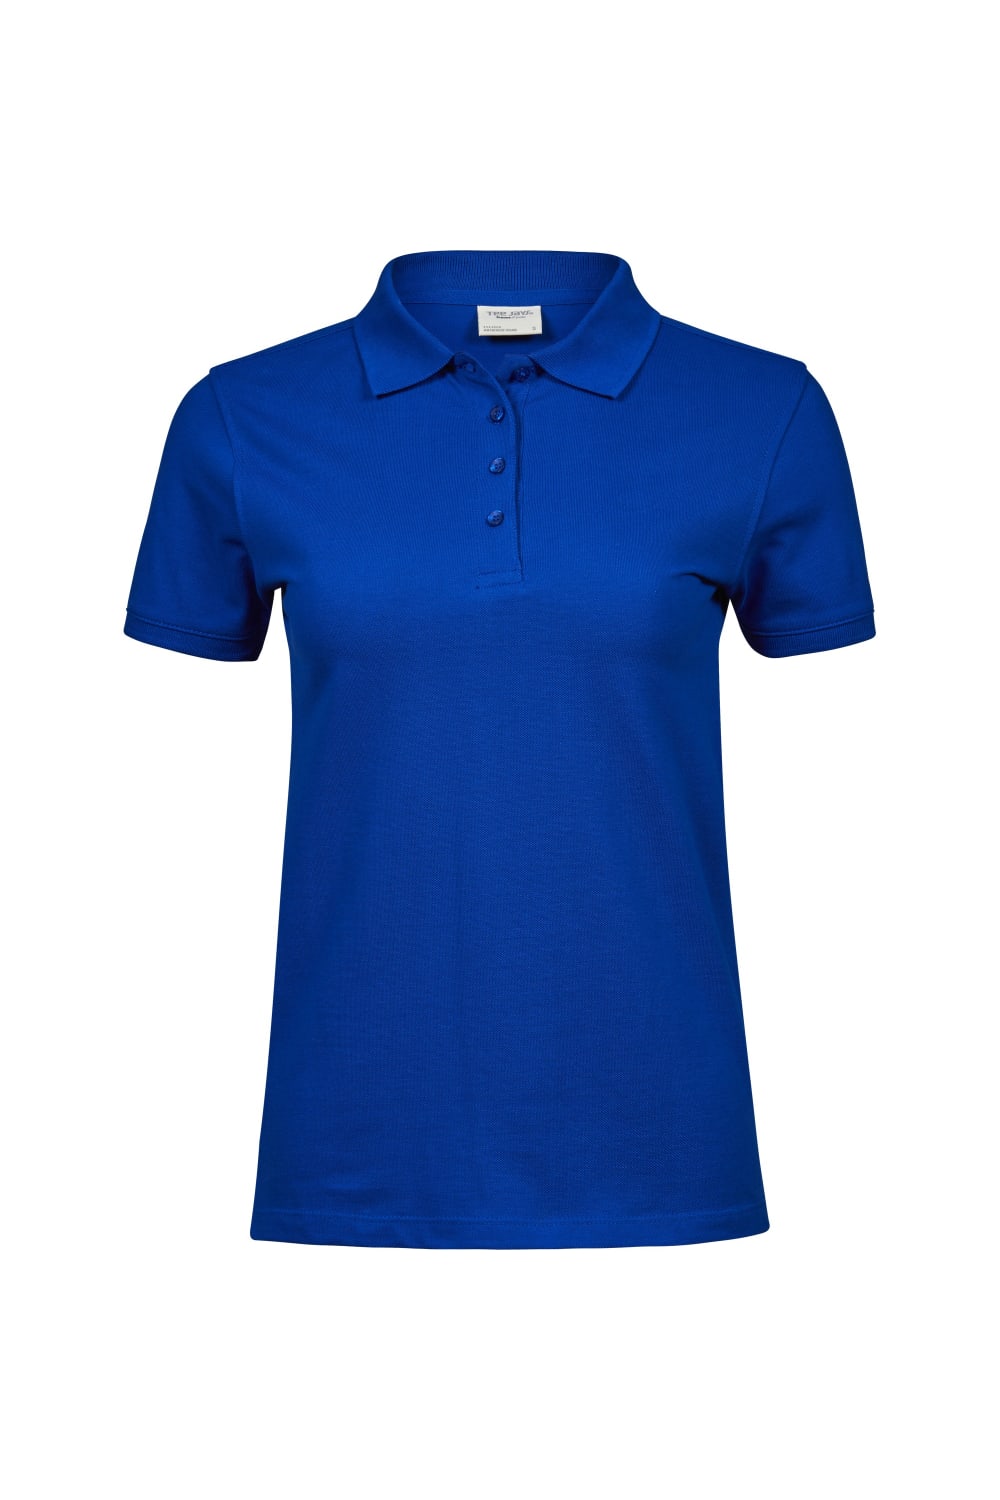 Tee Jays Womens/Ladies Heavy Cotton Pique Polo Shirt (Royal Blue)